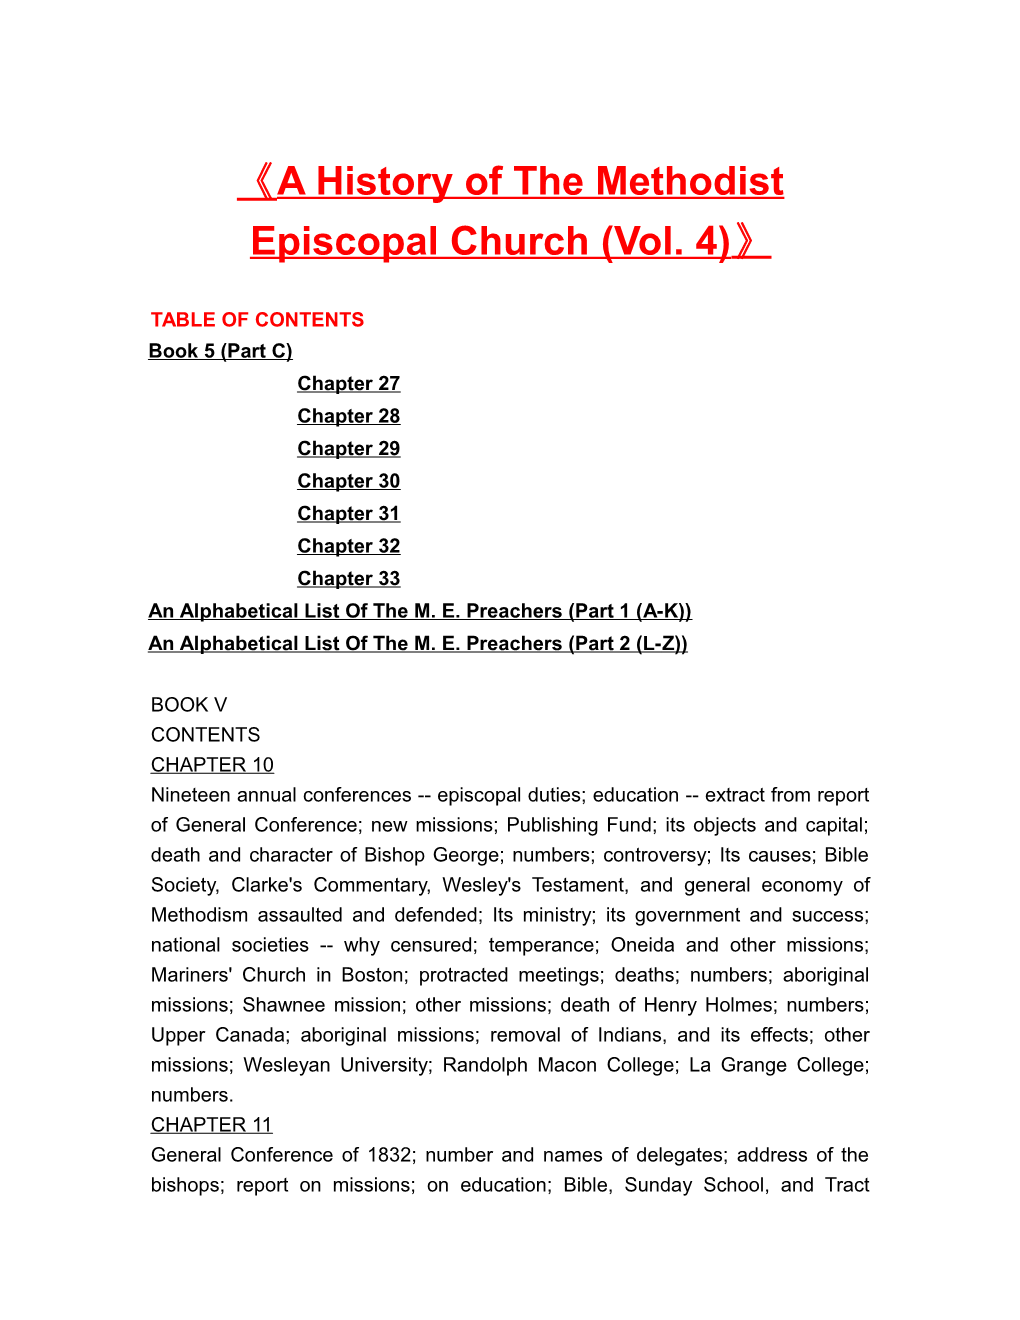 A History of the Methodist Episcopal Church (Vol. 4)